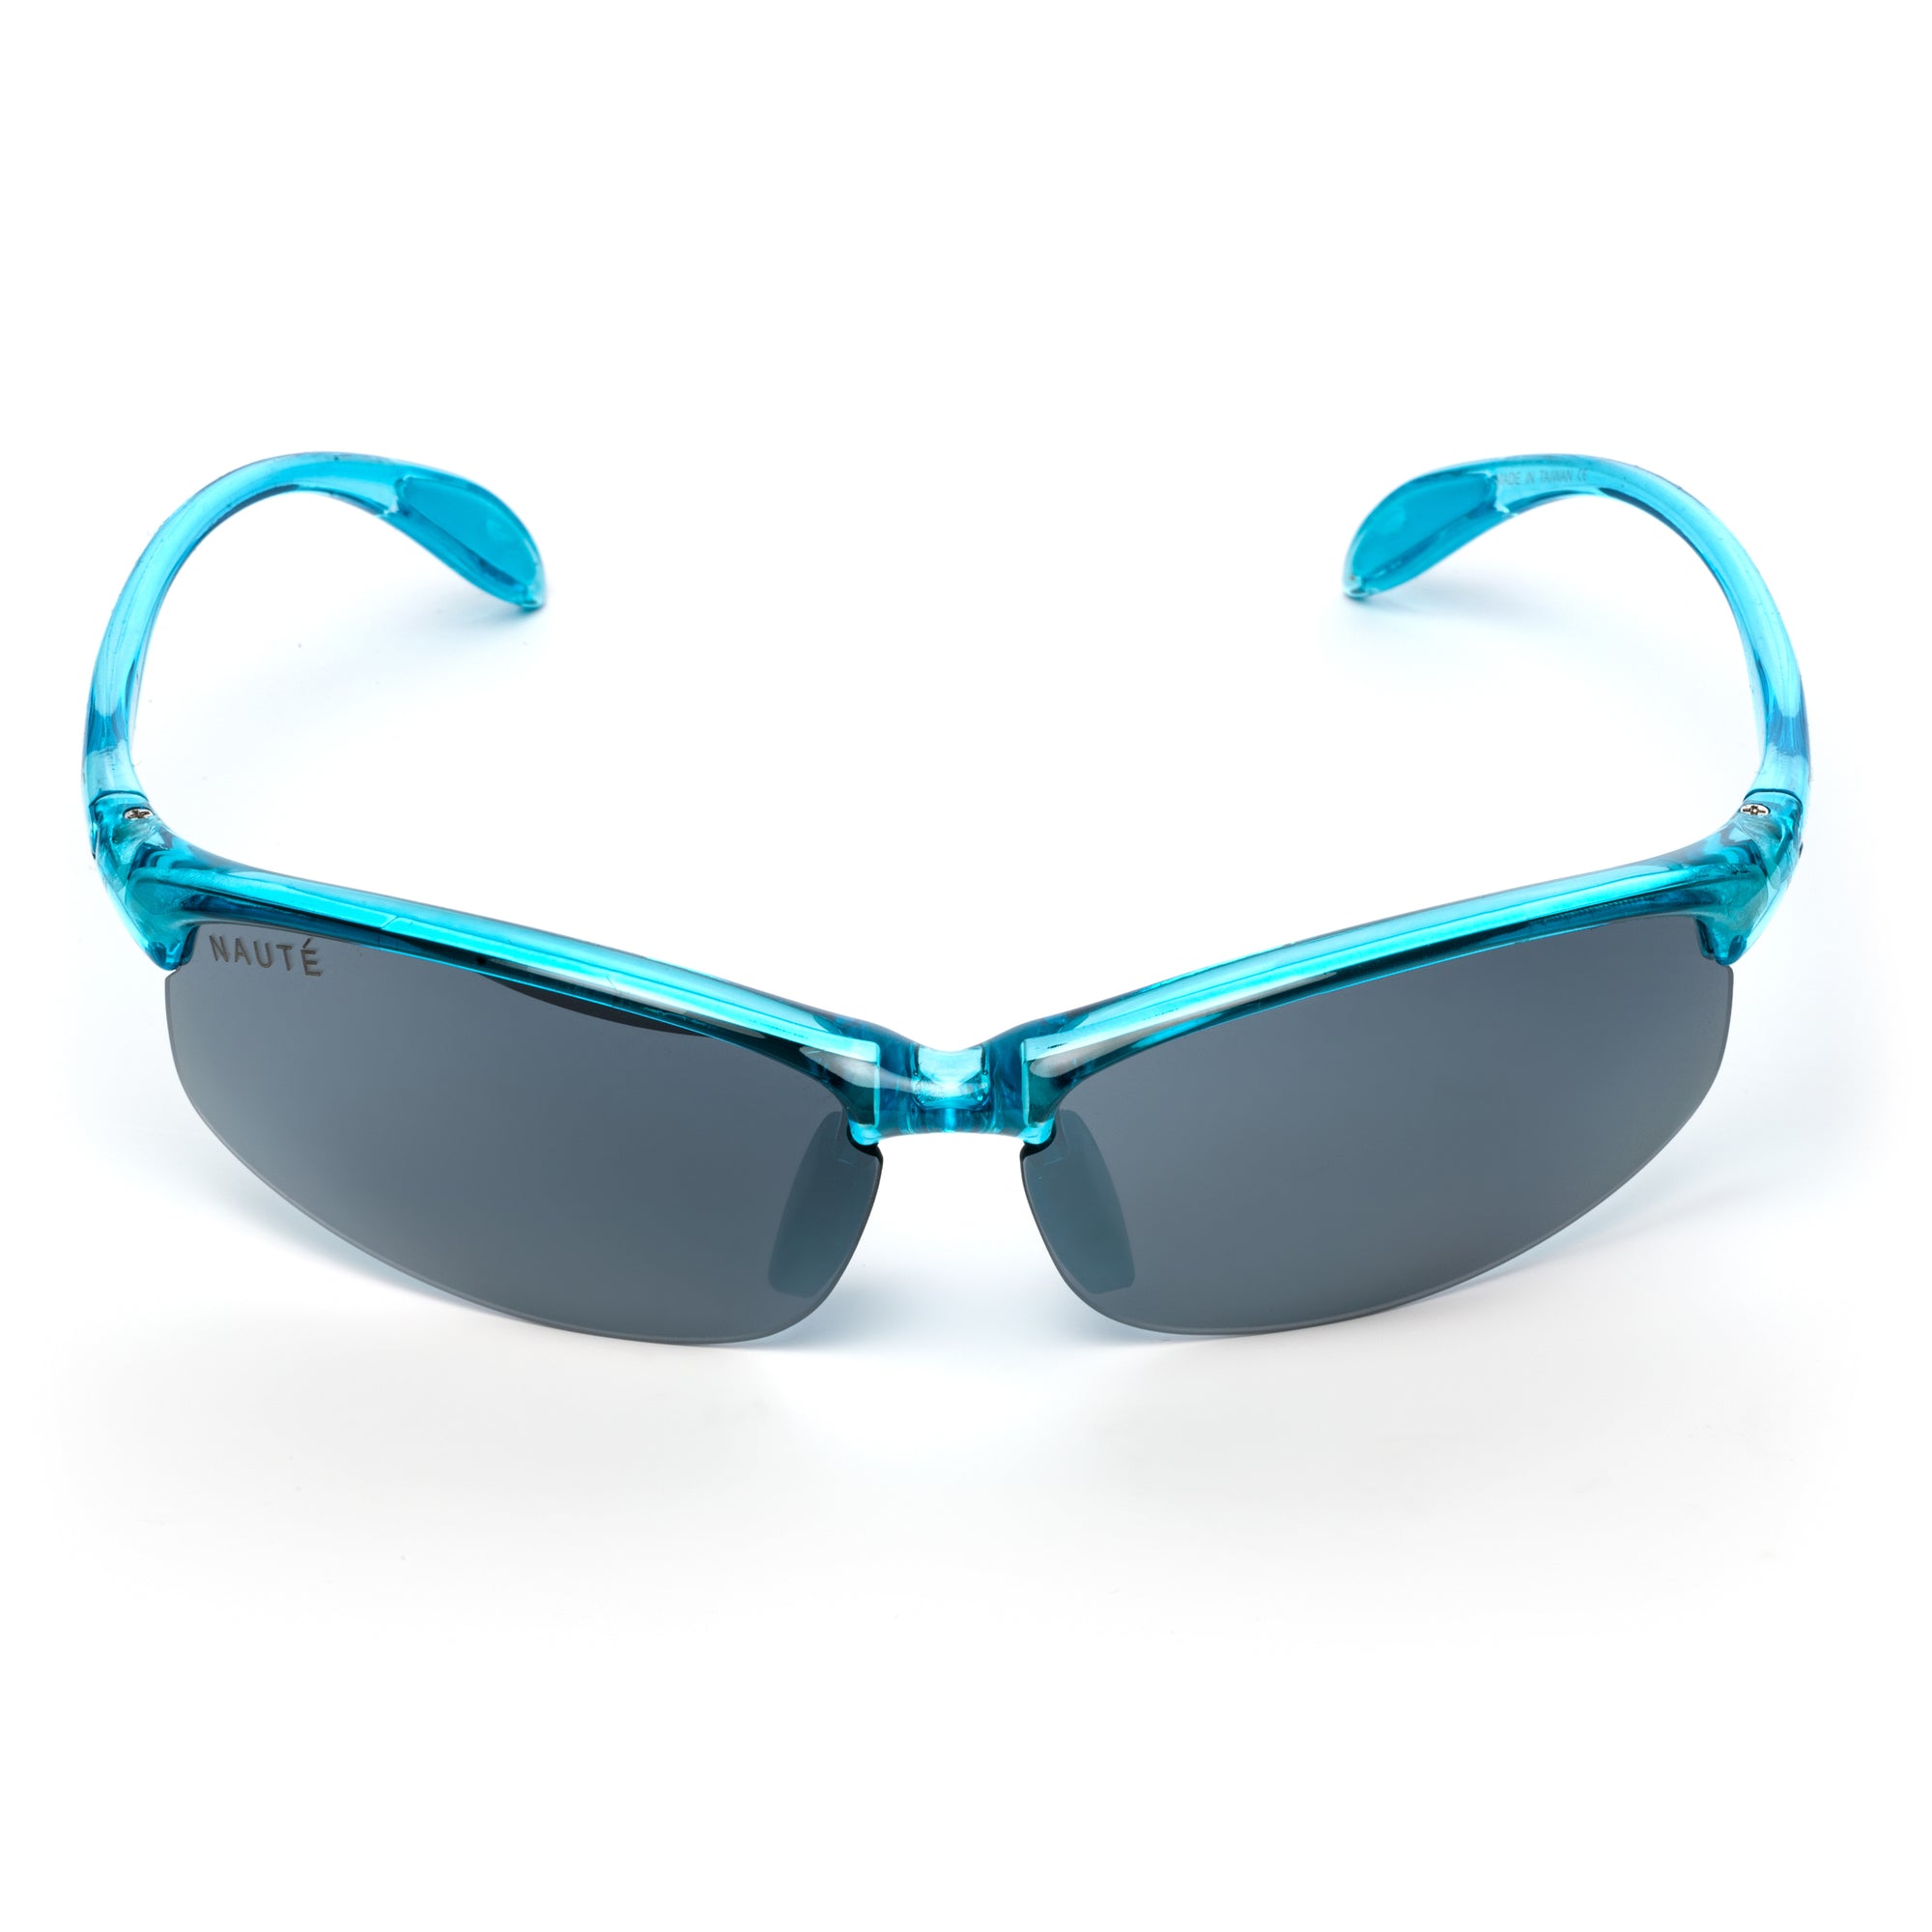 BLUPOND Sports Sunglasses for Men/Women - Anti Fog Polarised